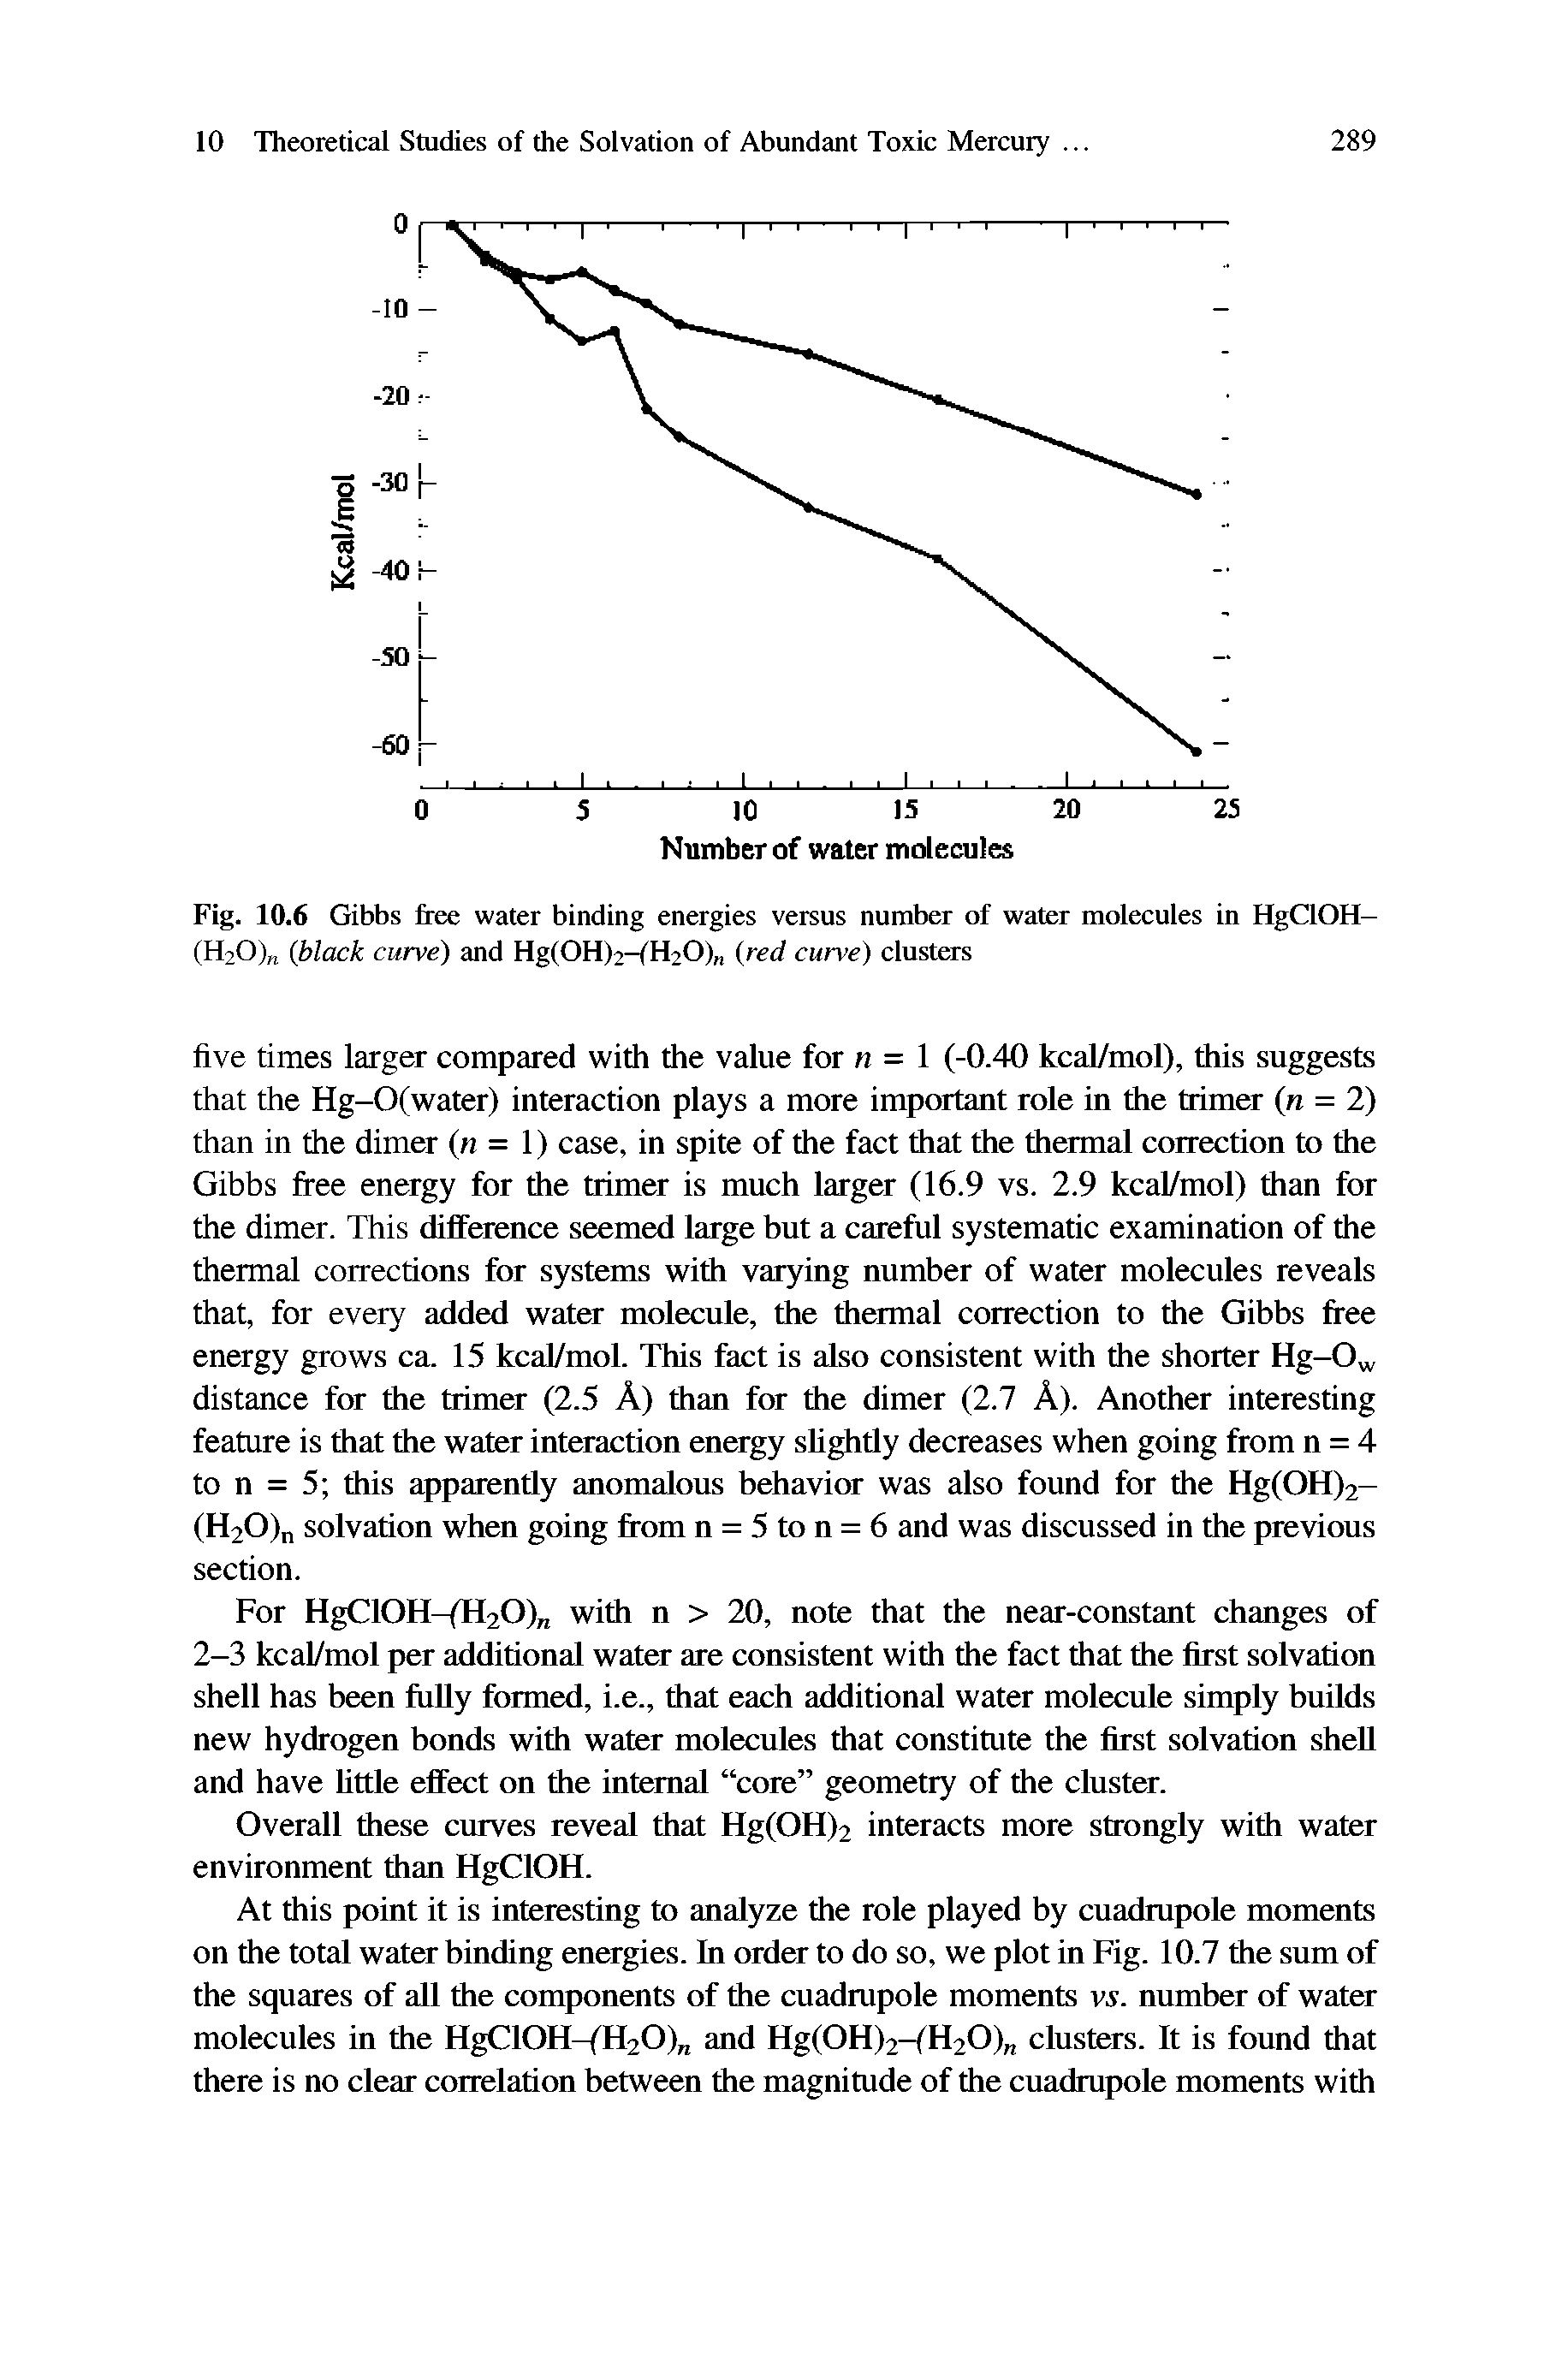 Fig. 10.6 Gibbs free water binding energies versus number of water molecules in HgOOH-(H20) black curve) and Hg(0H)2-(H20) red curve) clusters...